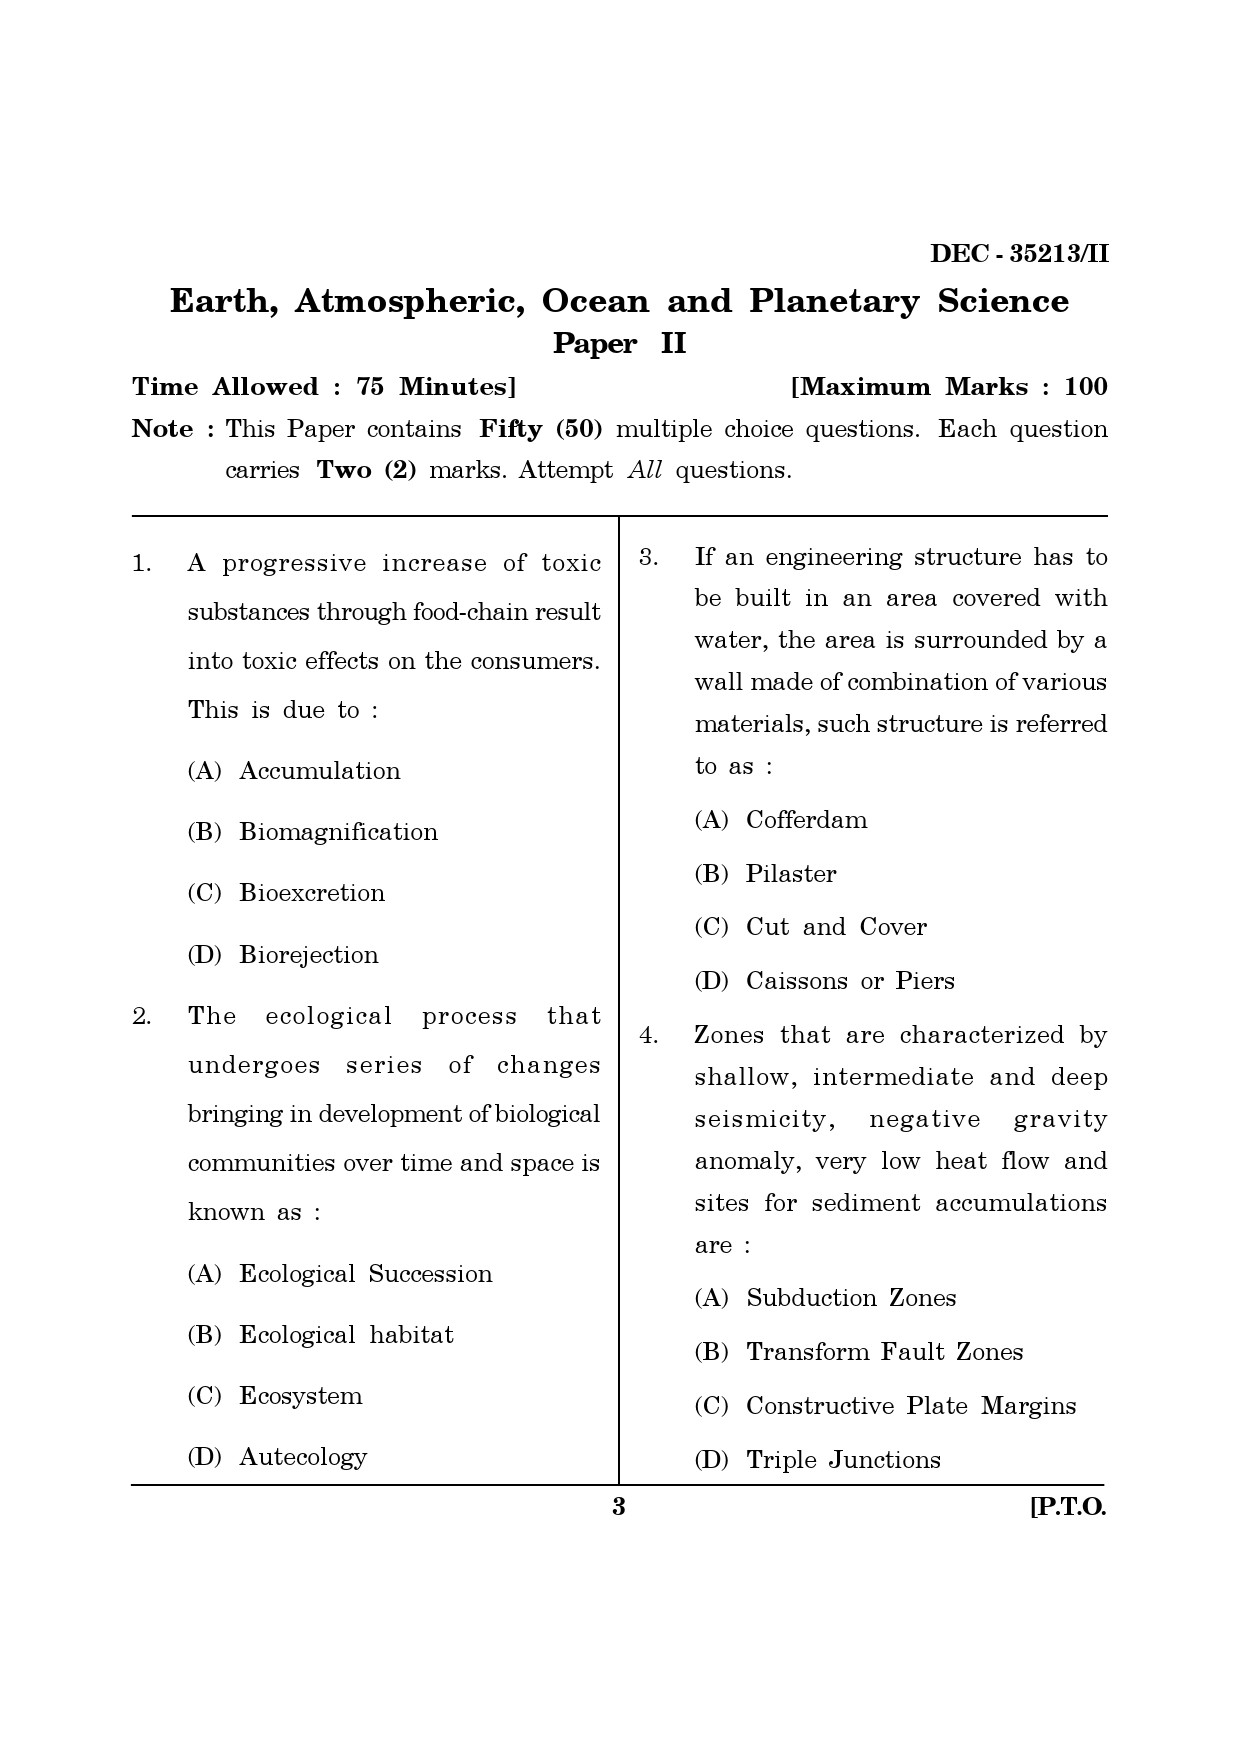 Maharashtra SET Earth Atmospheric Ocean Planetary Science Question Paper II December 2013 2